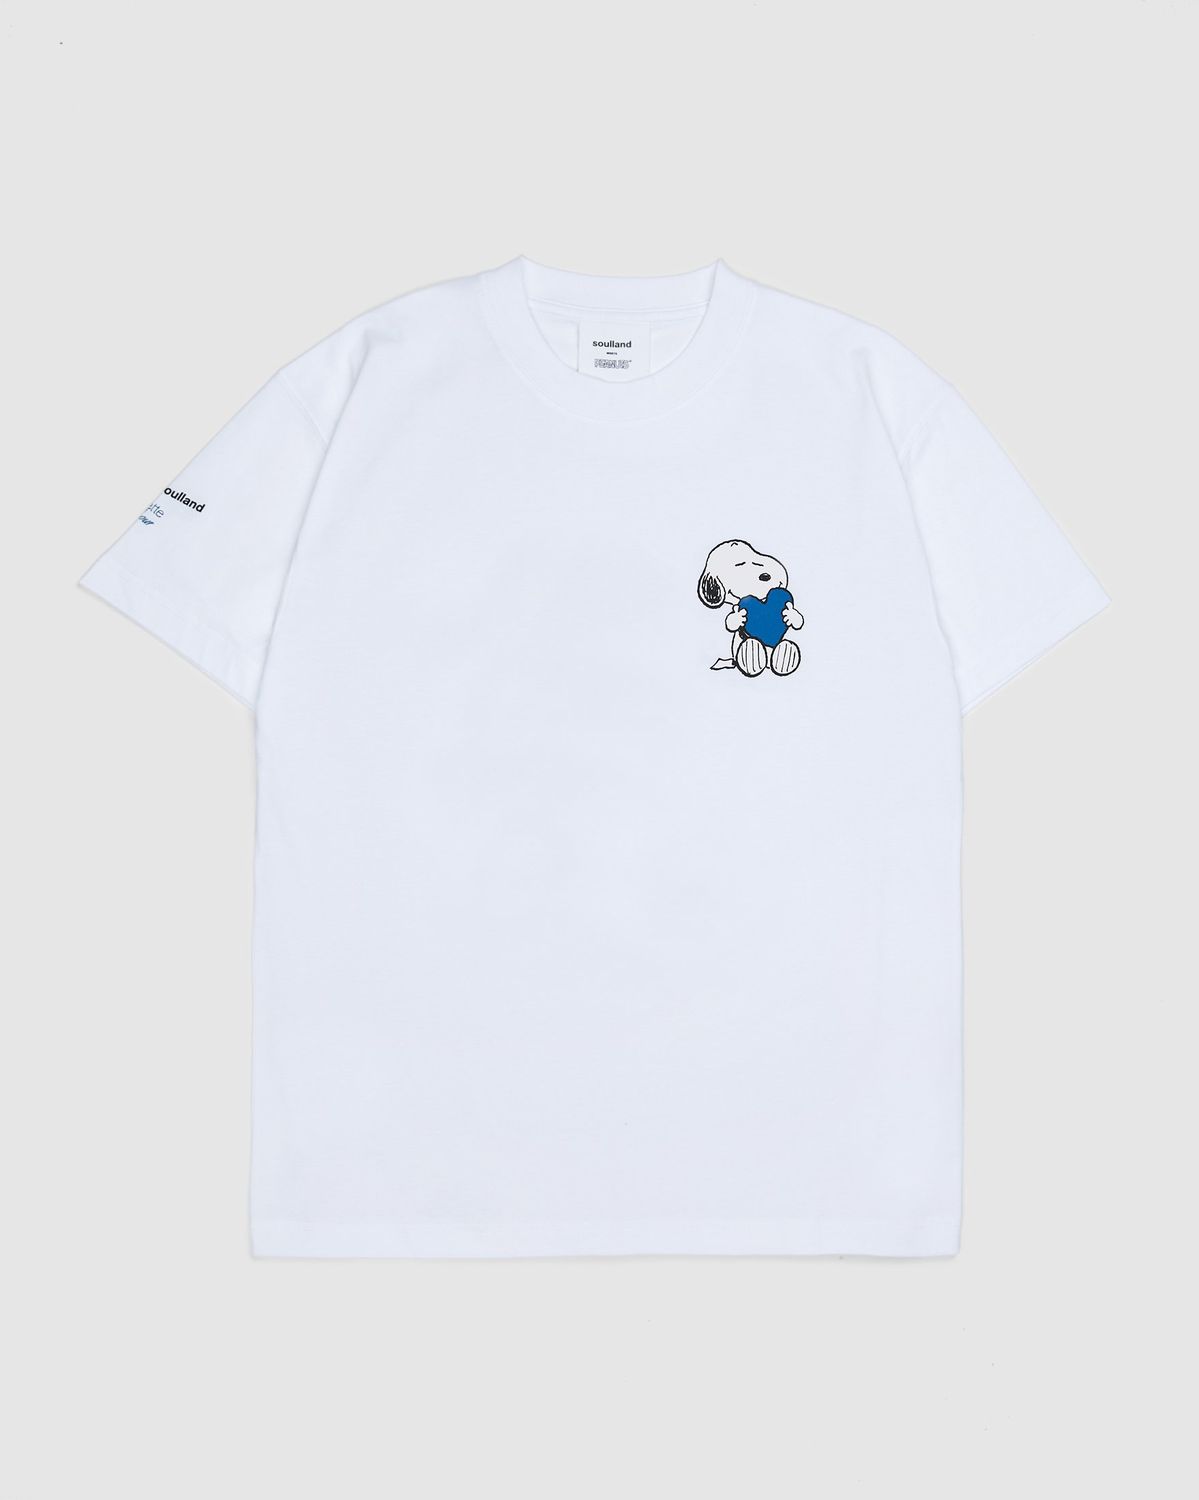 Colette Mon Amour x Soulland – Snoopy Comics White T-Shirt - Tops - White - Image 1